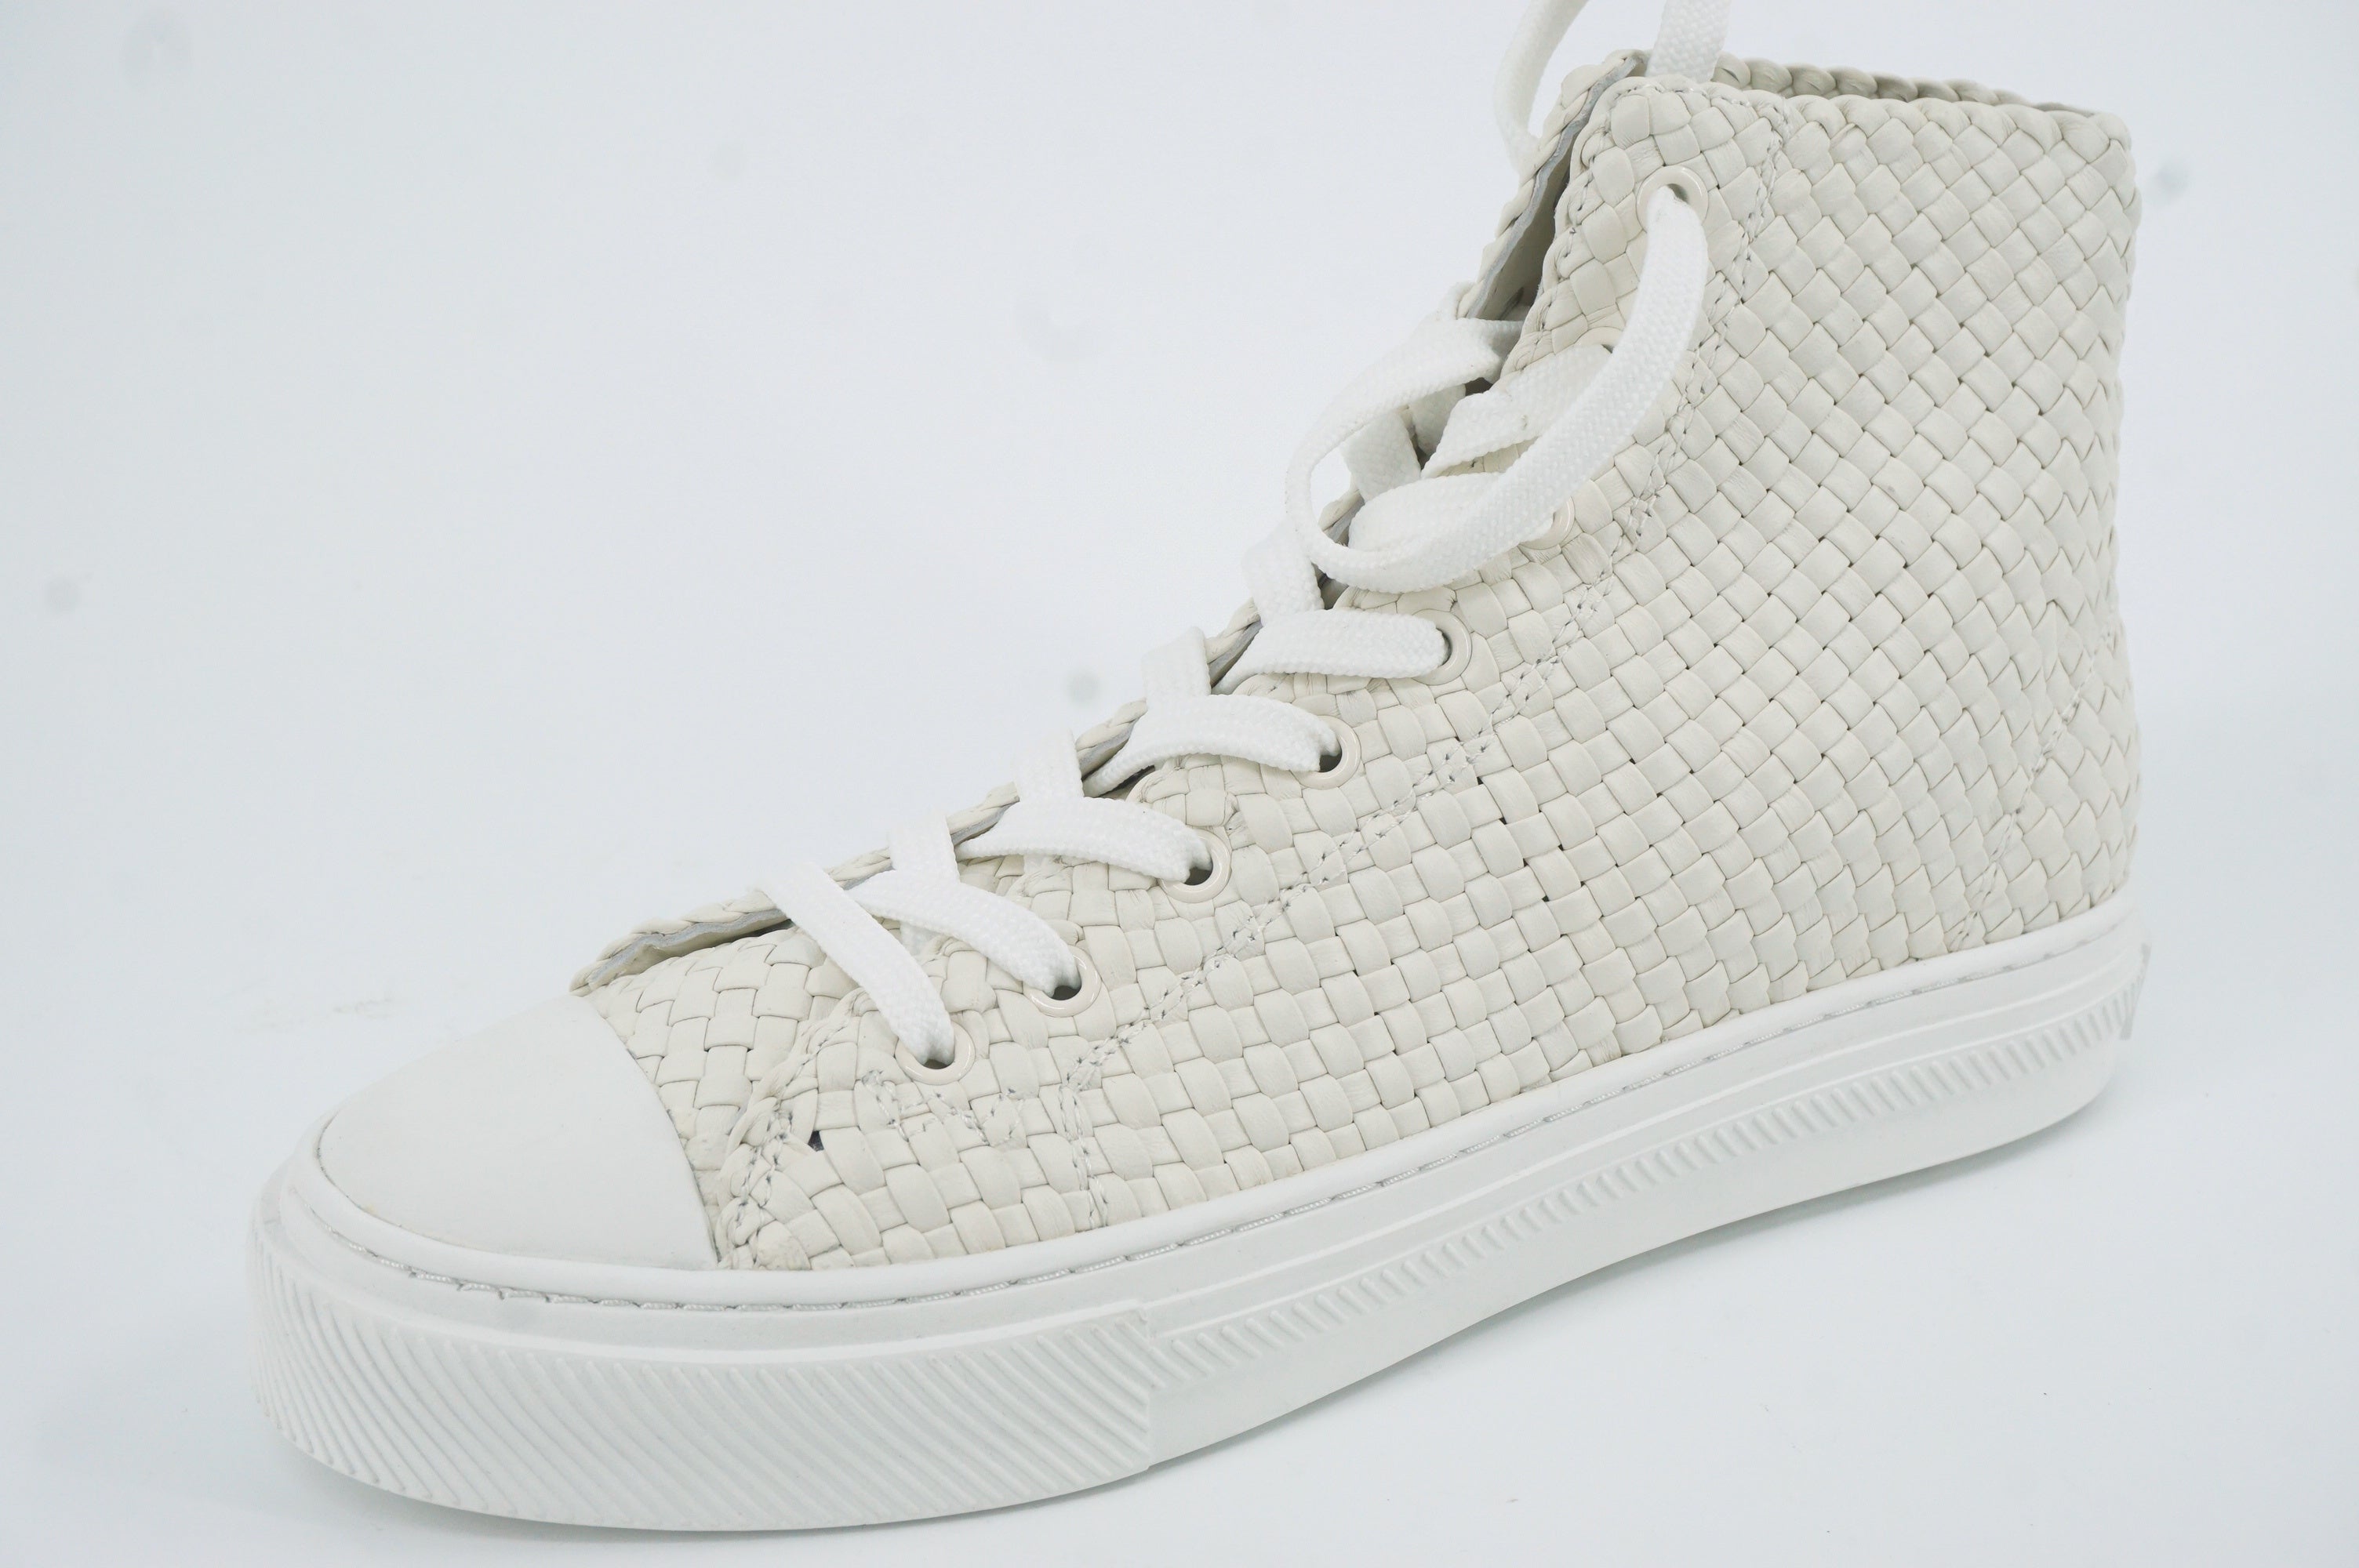 Stuart Weitzman Wova Woven Cream Leather High Top Flat Sneakers Size 9 New $495